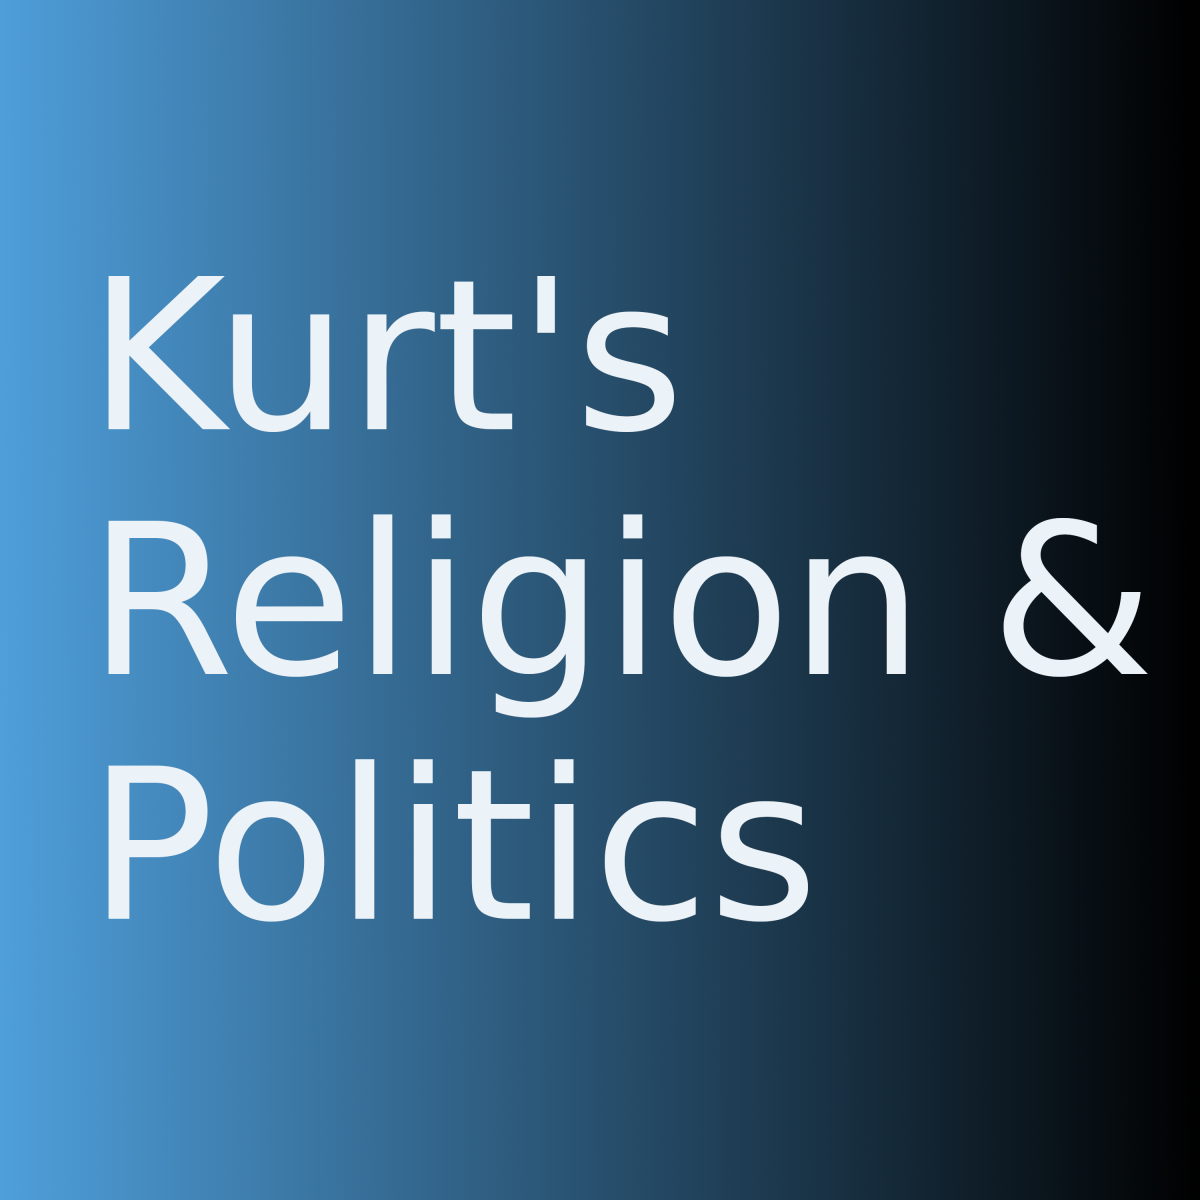 Their Job – Religion and Politics